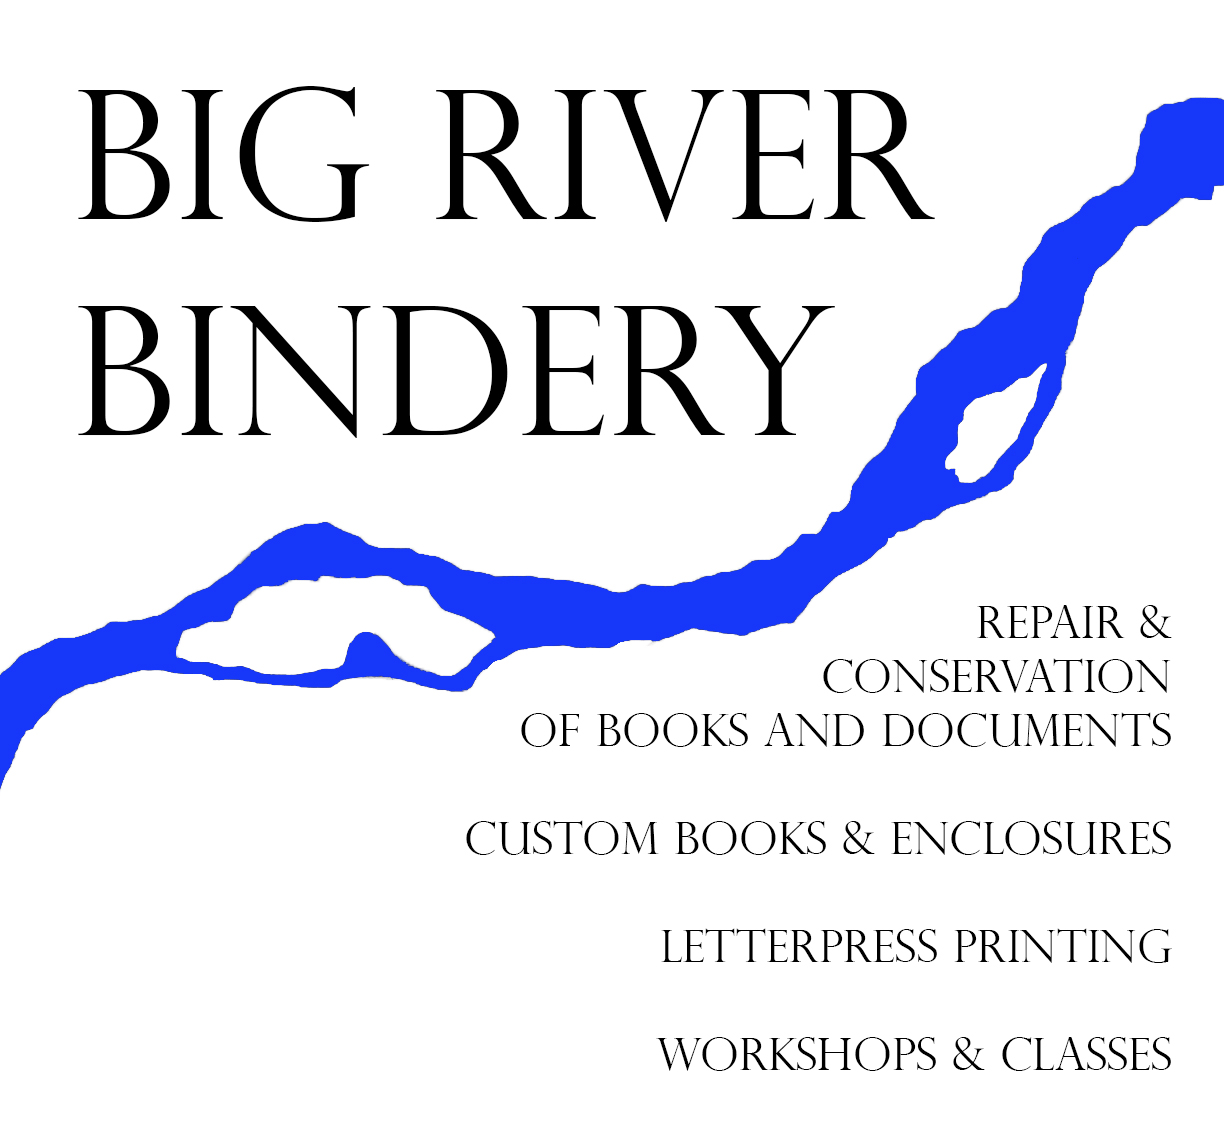 Big River Bindery